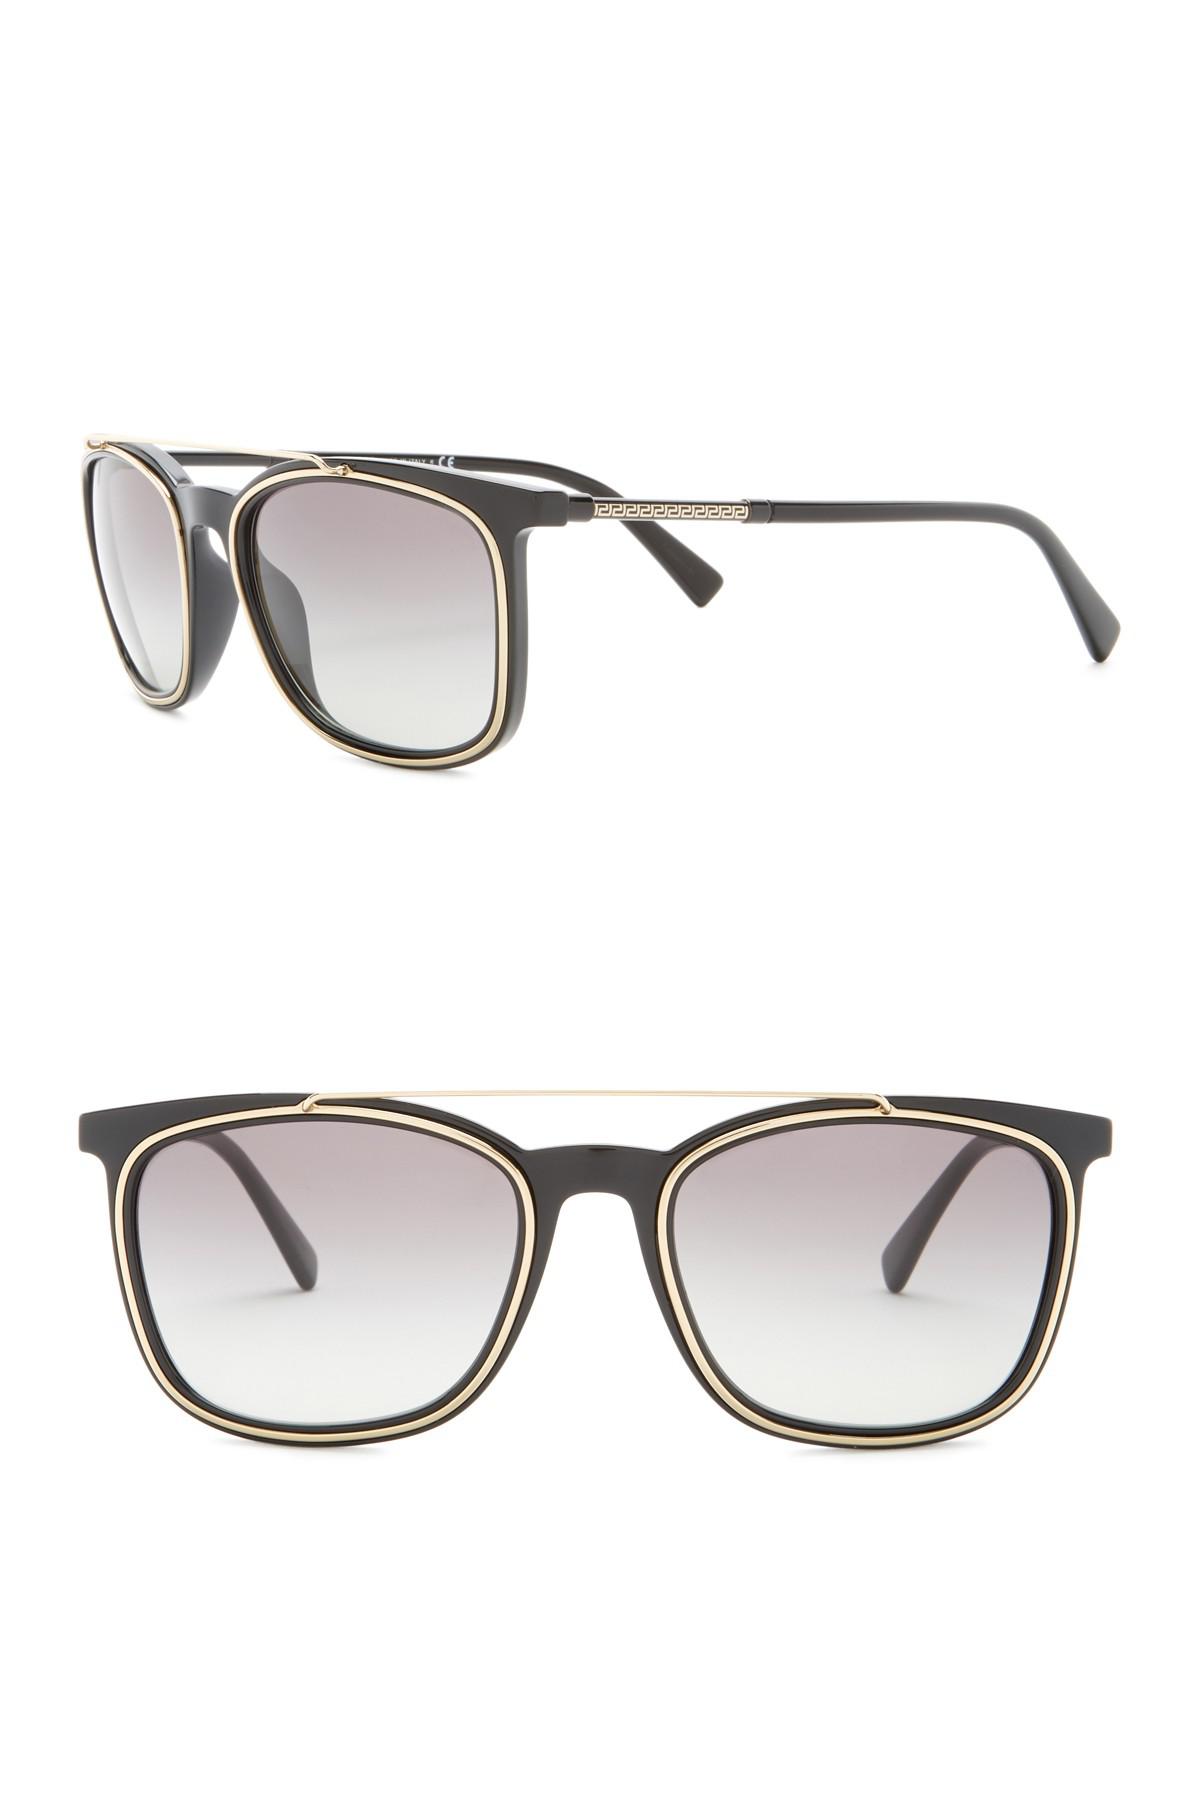 versace 56mm square sunglasses